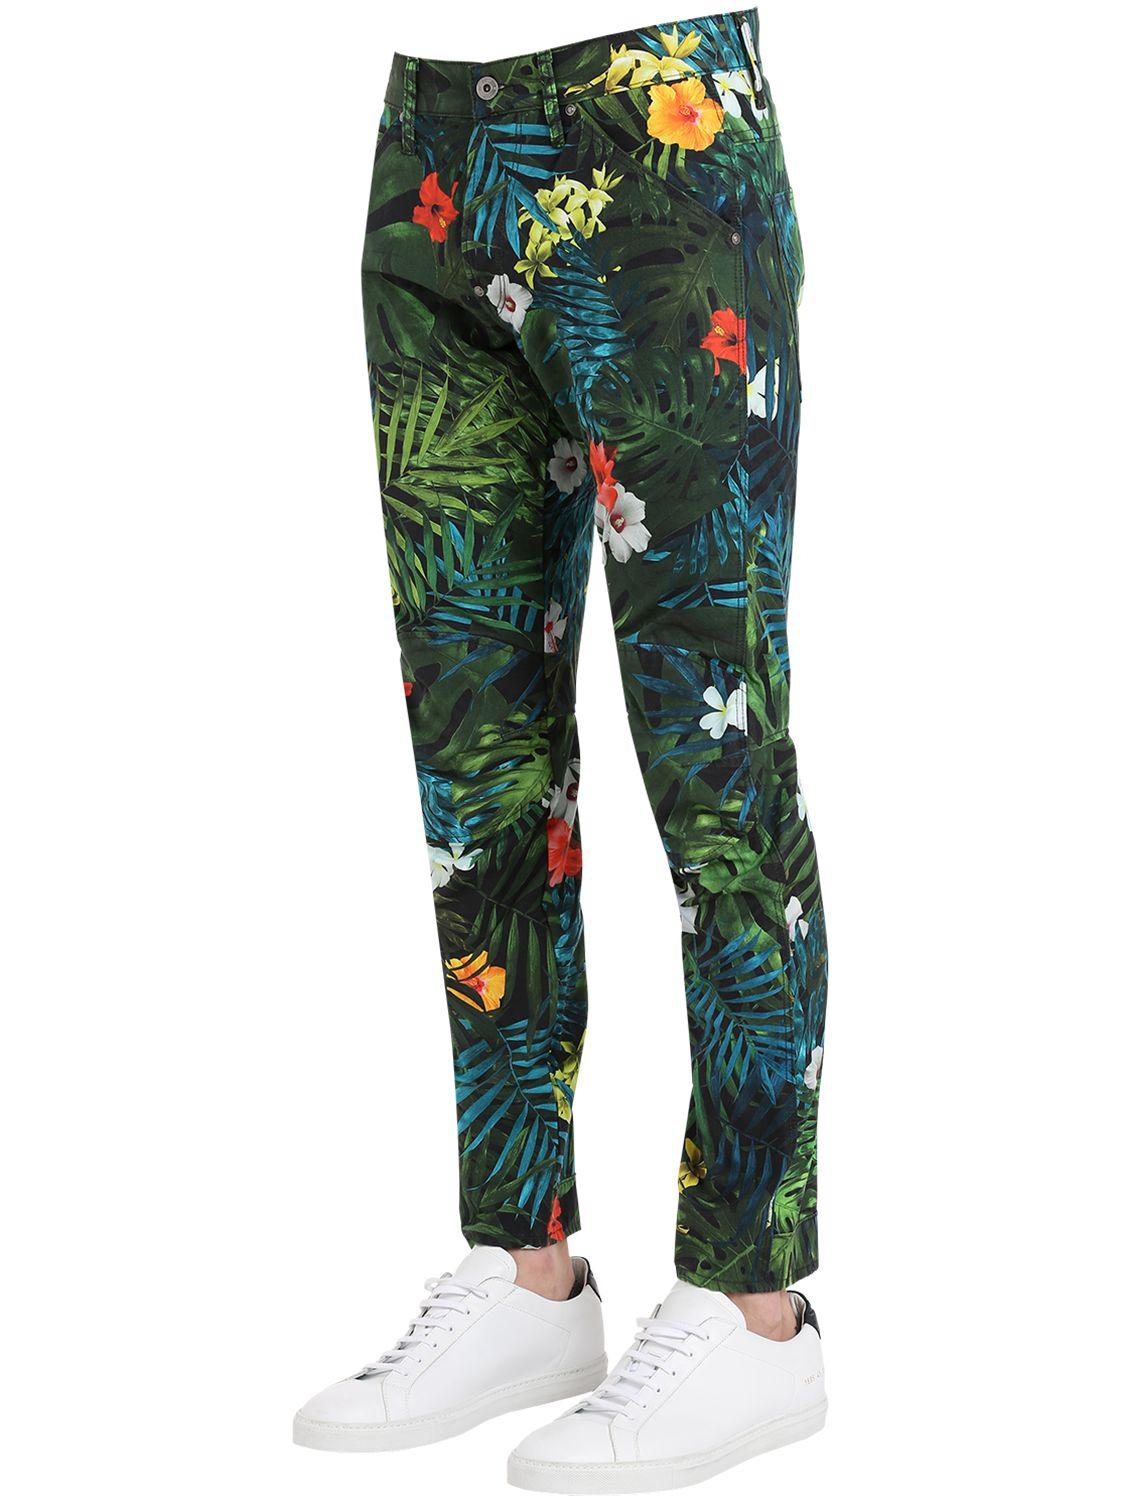 G-Star RAW Denim 5622 Elwood Aloha Print Jeans in Green for Men - Lyst